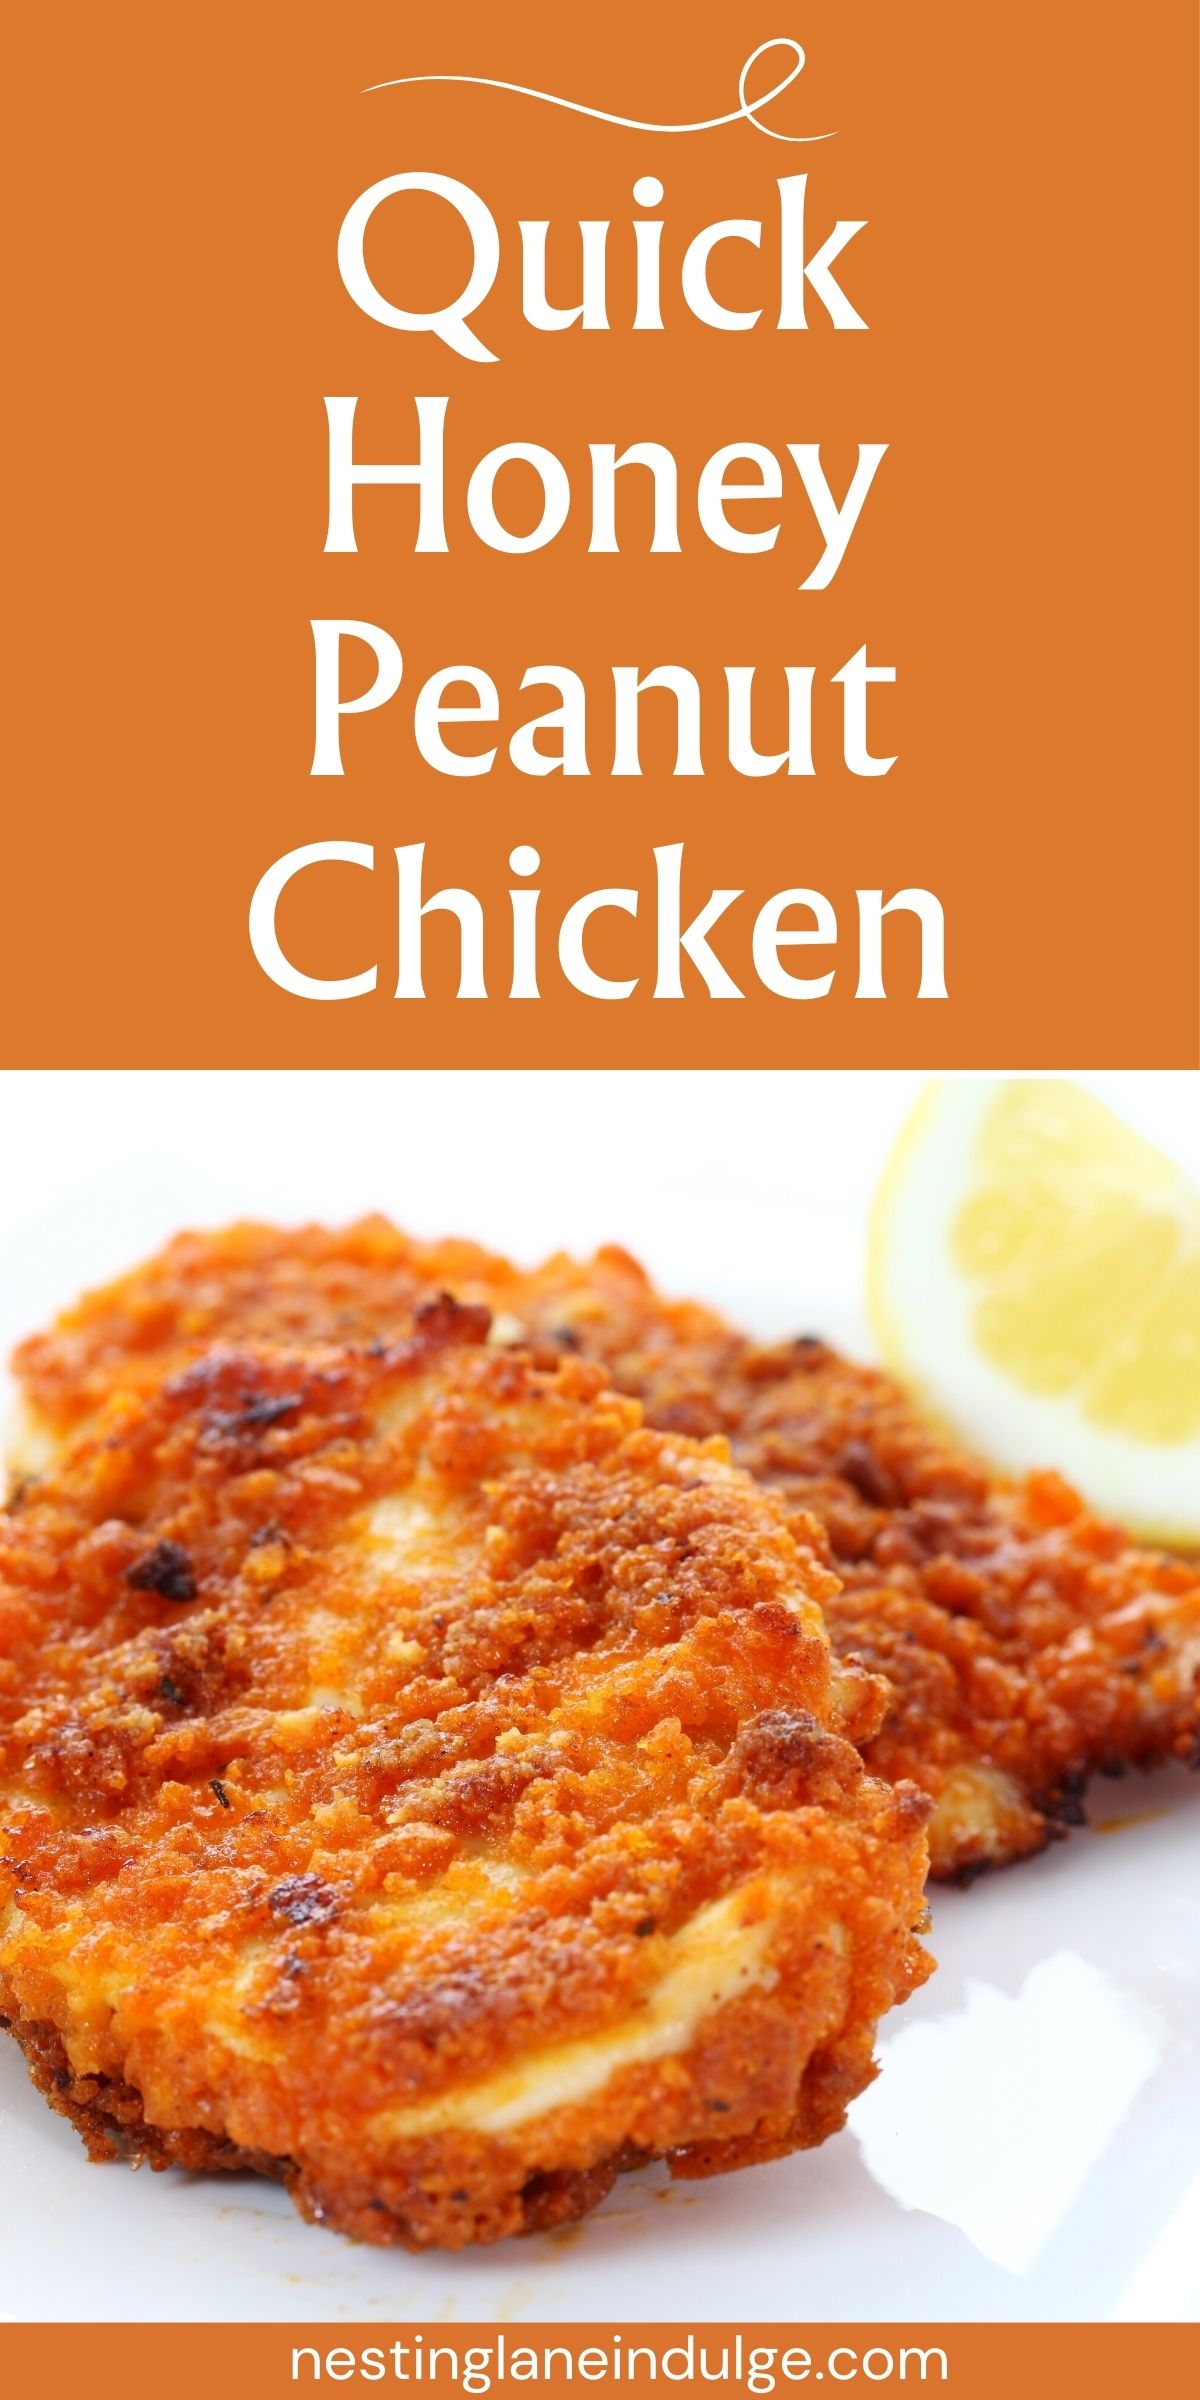 Honey Peanut Chicken Recipe graphic.